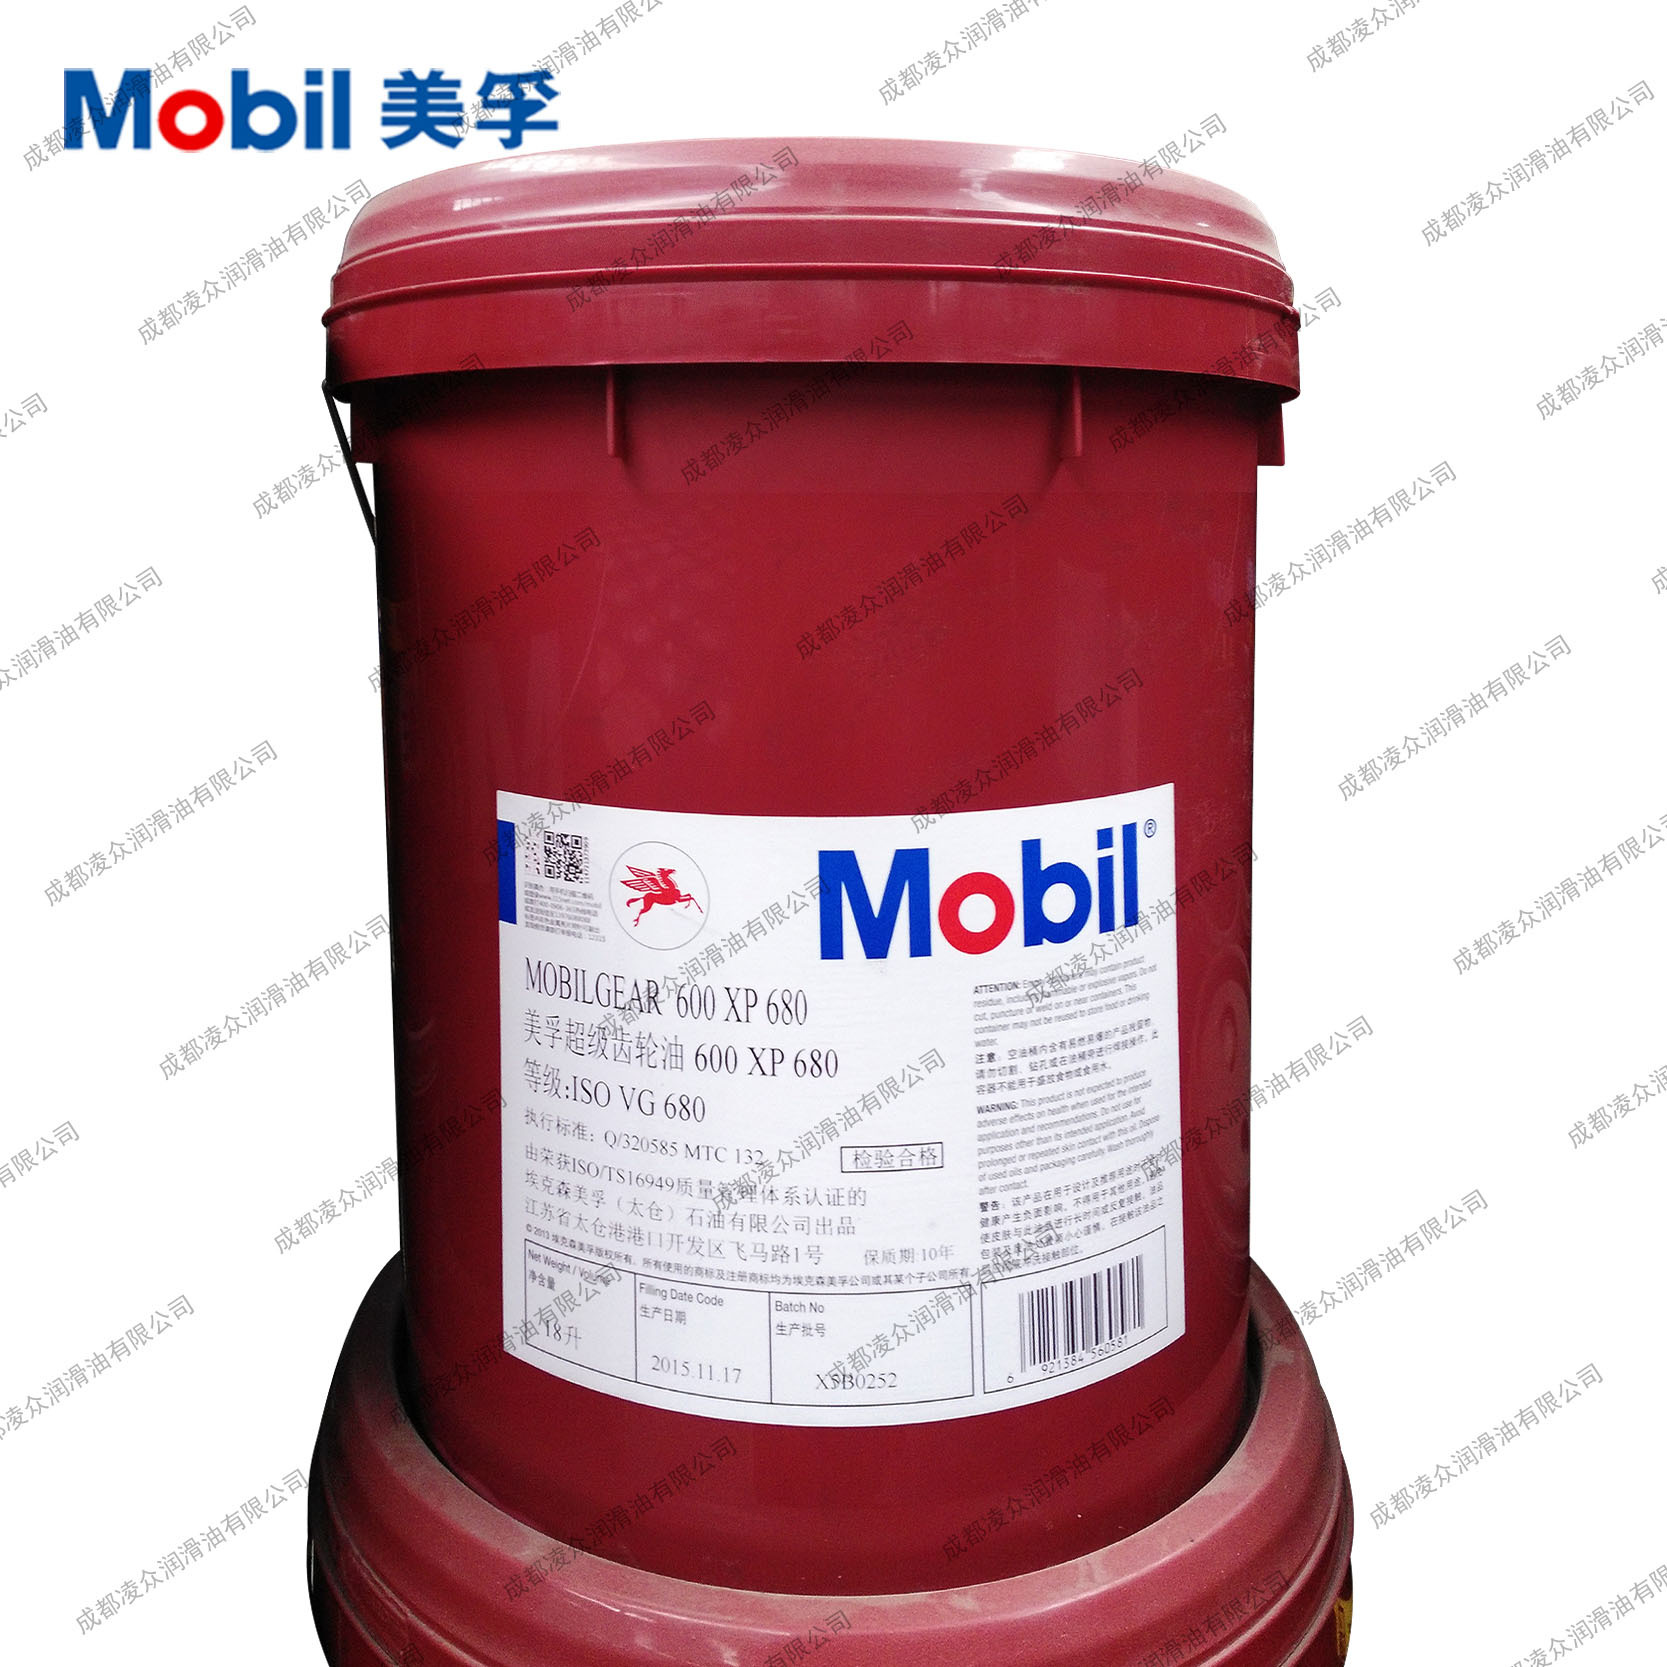 MOBILGEAR 美孚超级齿轮油600XP680 ISO VG680号齿轮油